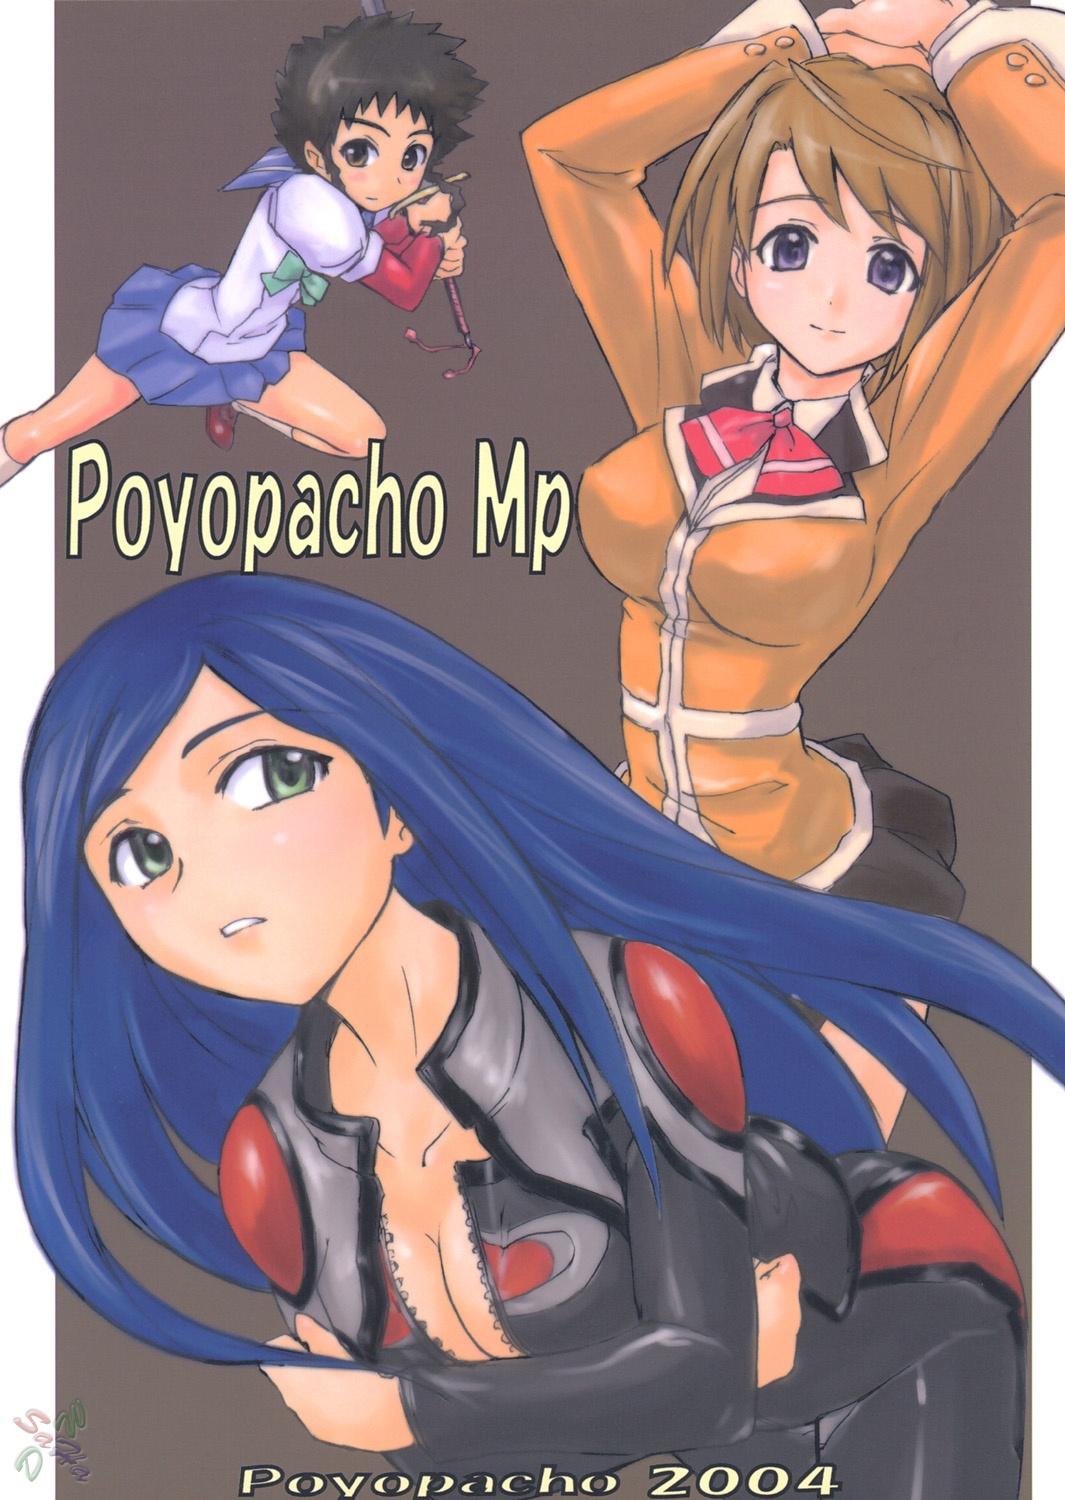 Poyopacho Mp 0